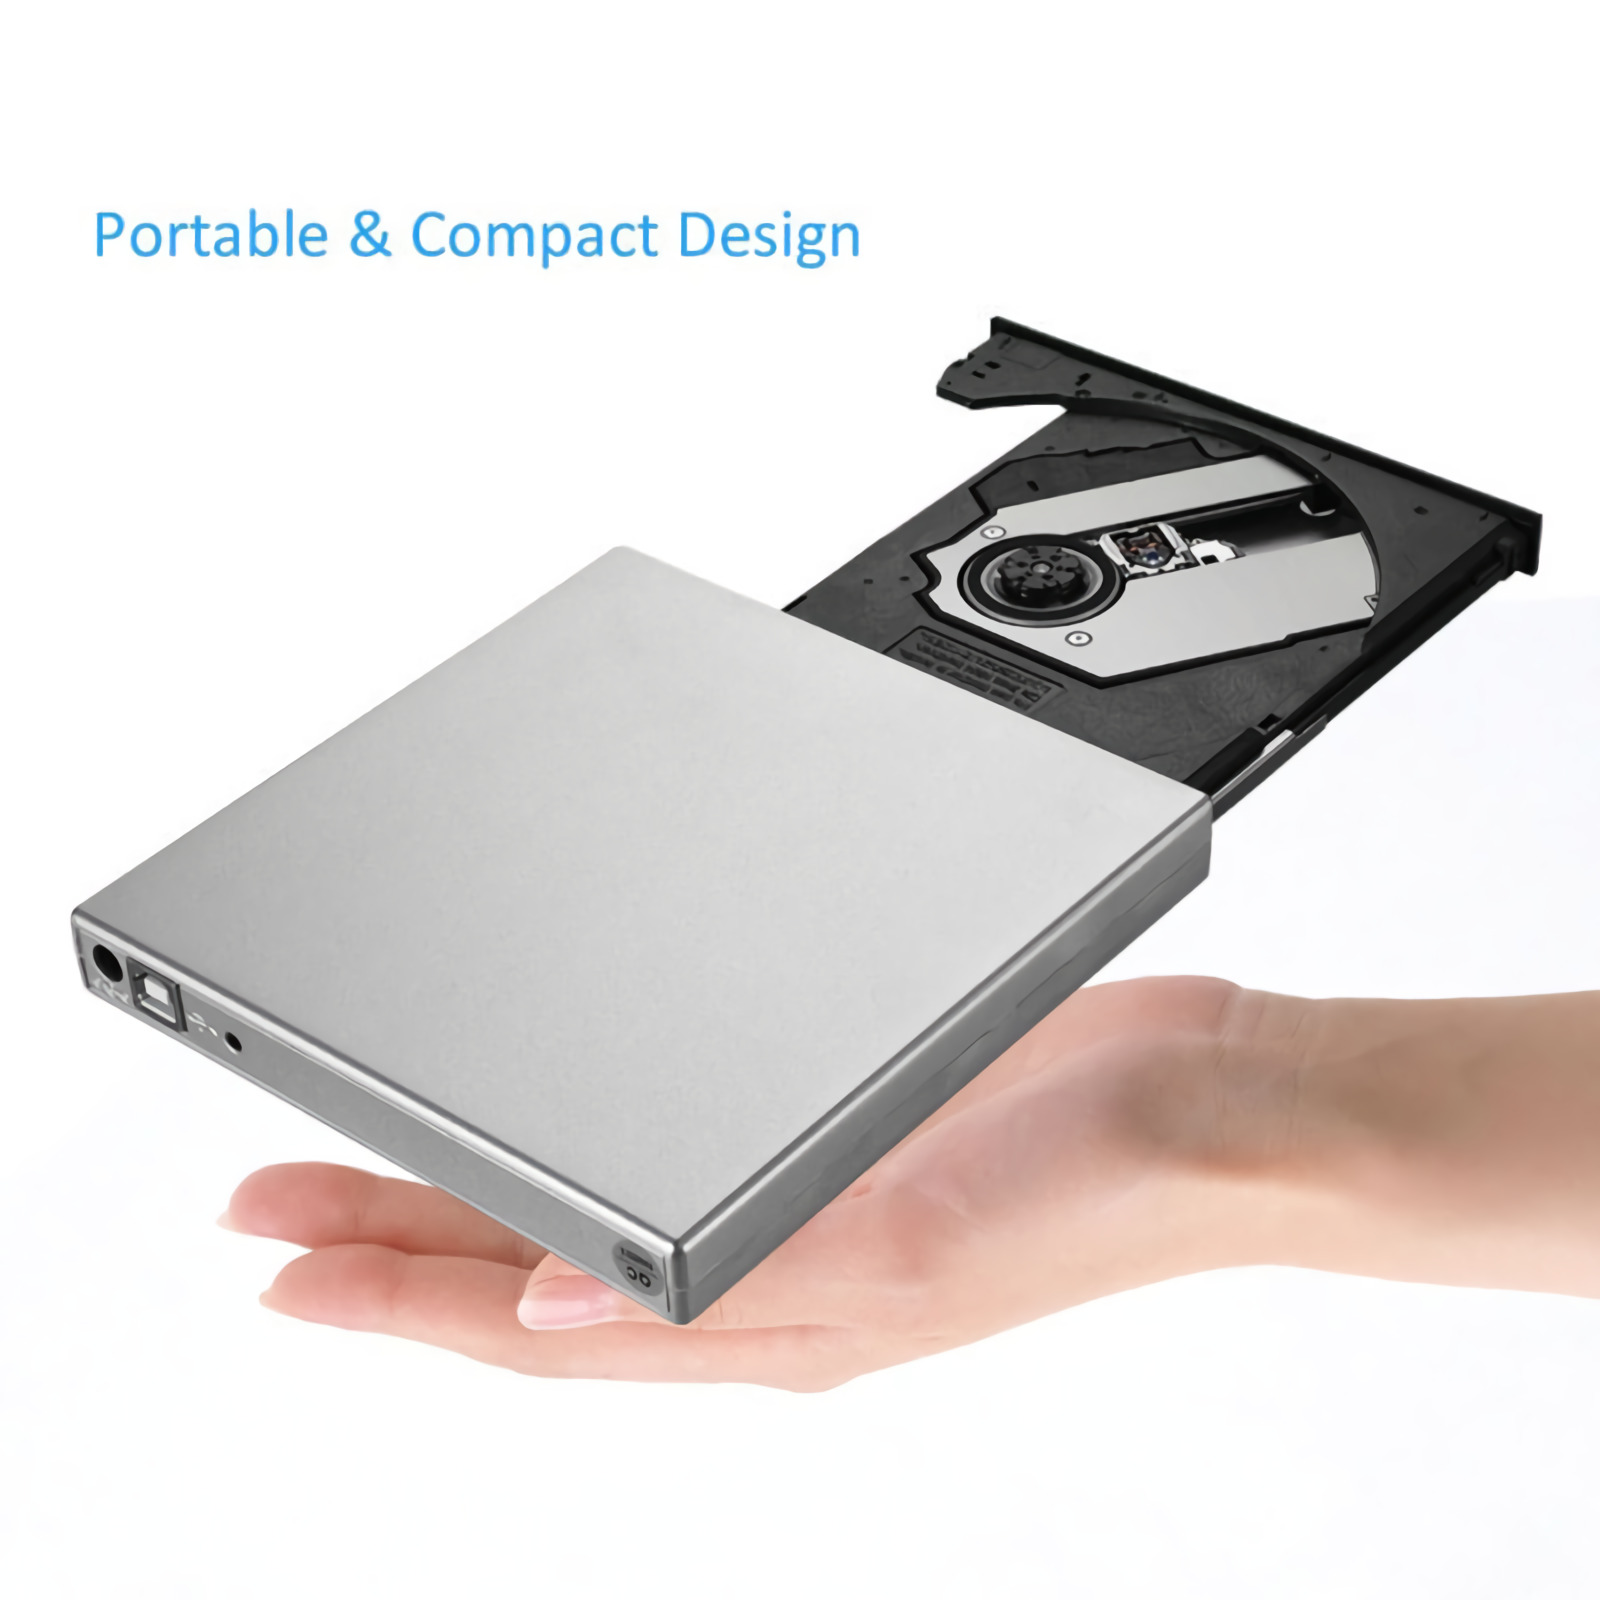 External-DVD-Optical-Drive-Combo-USB-20-CD-Burner-CDDVD-ROM-CD-RW-Player-Slim-Portable-Reader-Record-1968614-1